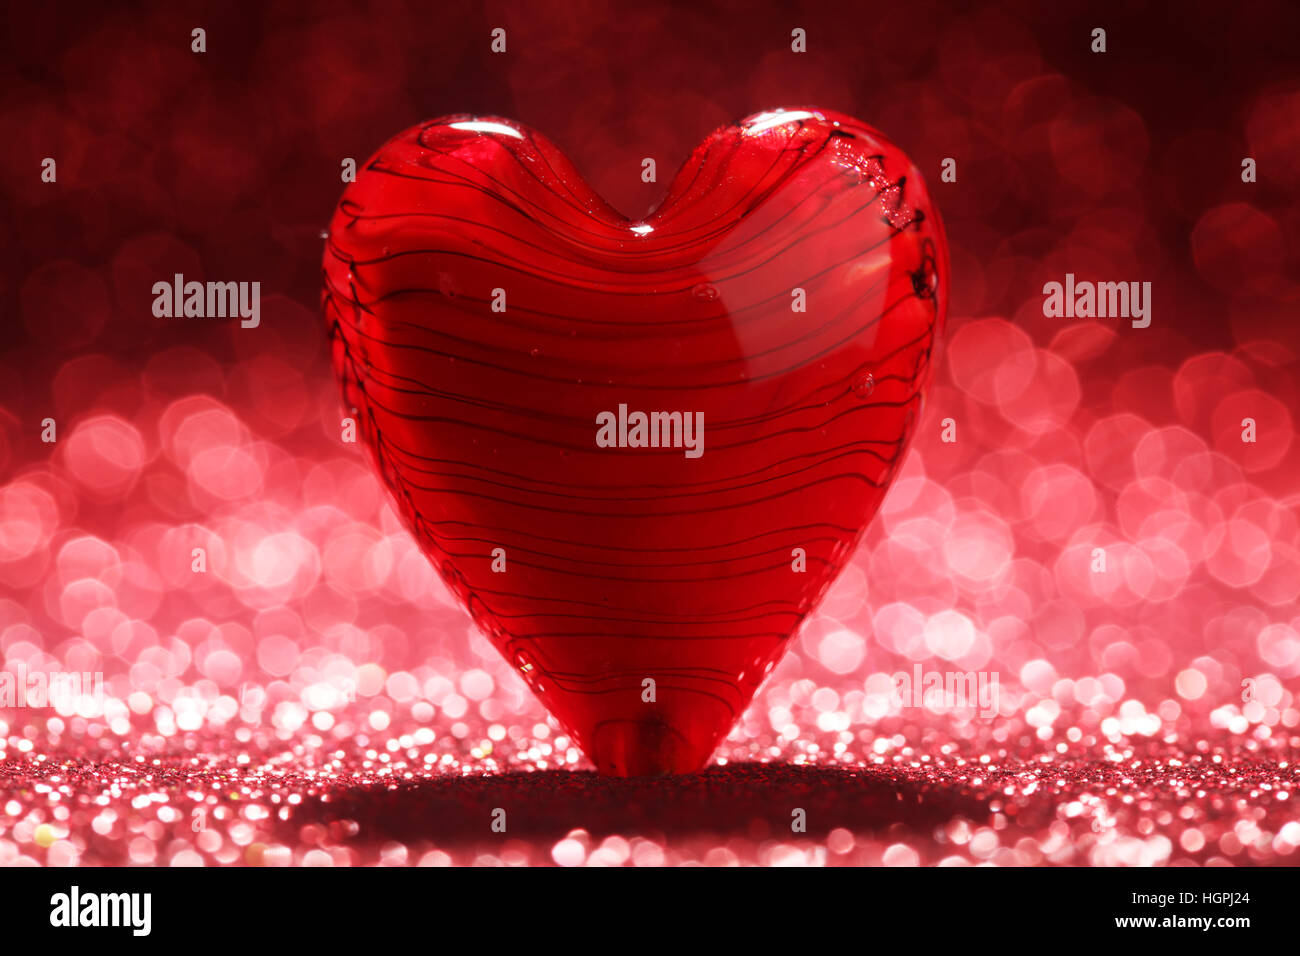 Shiny red heart background Stock Photo